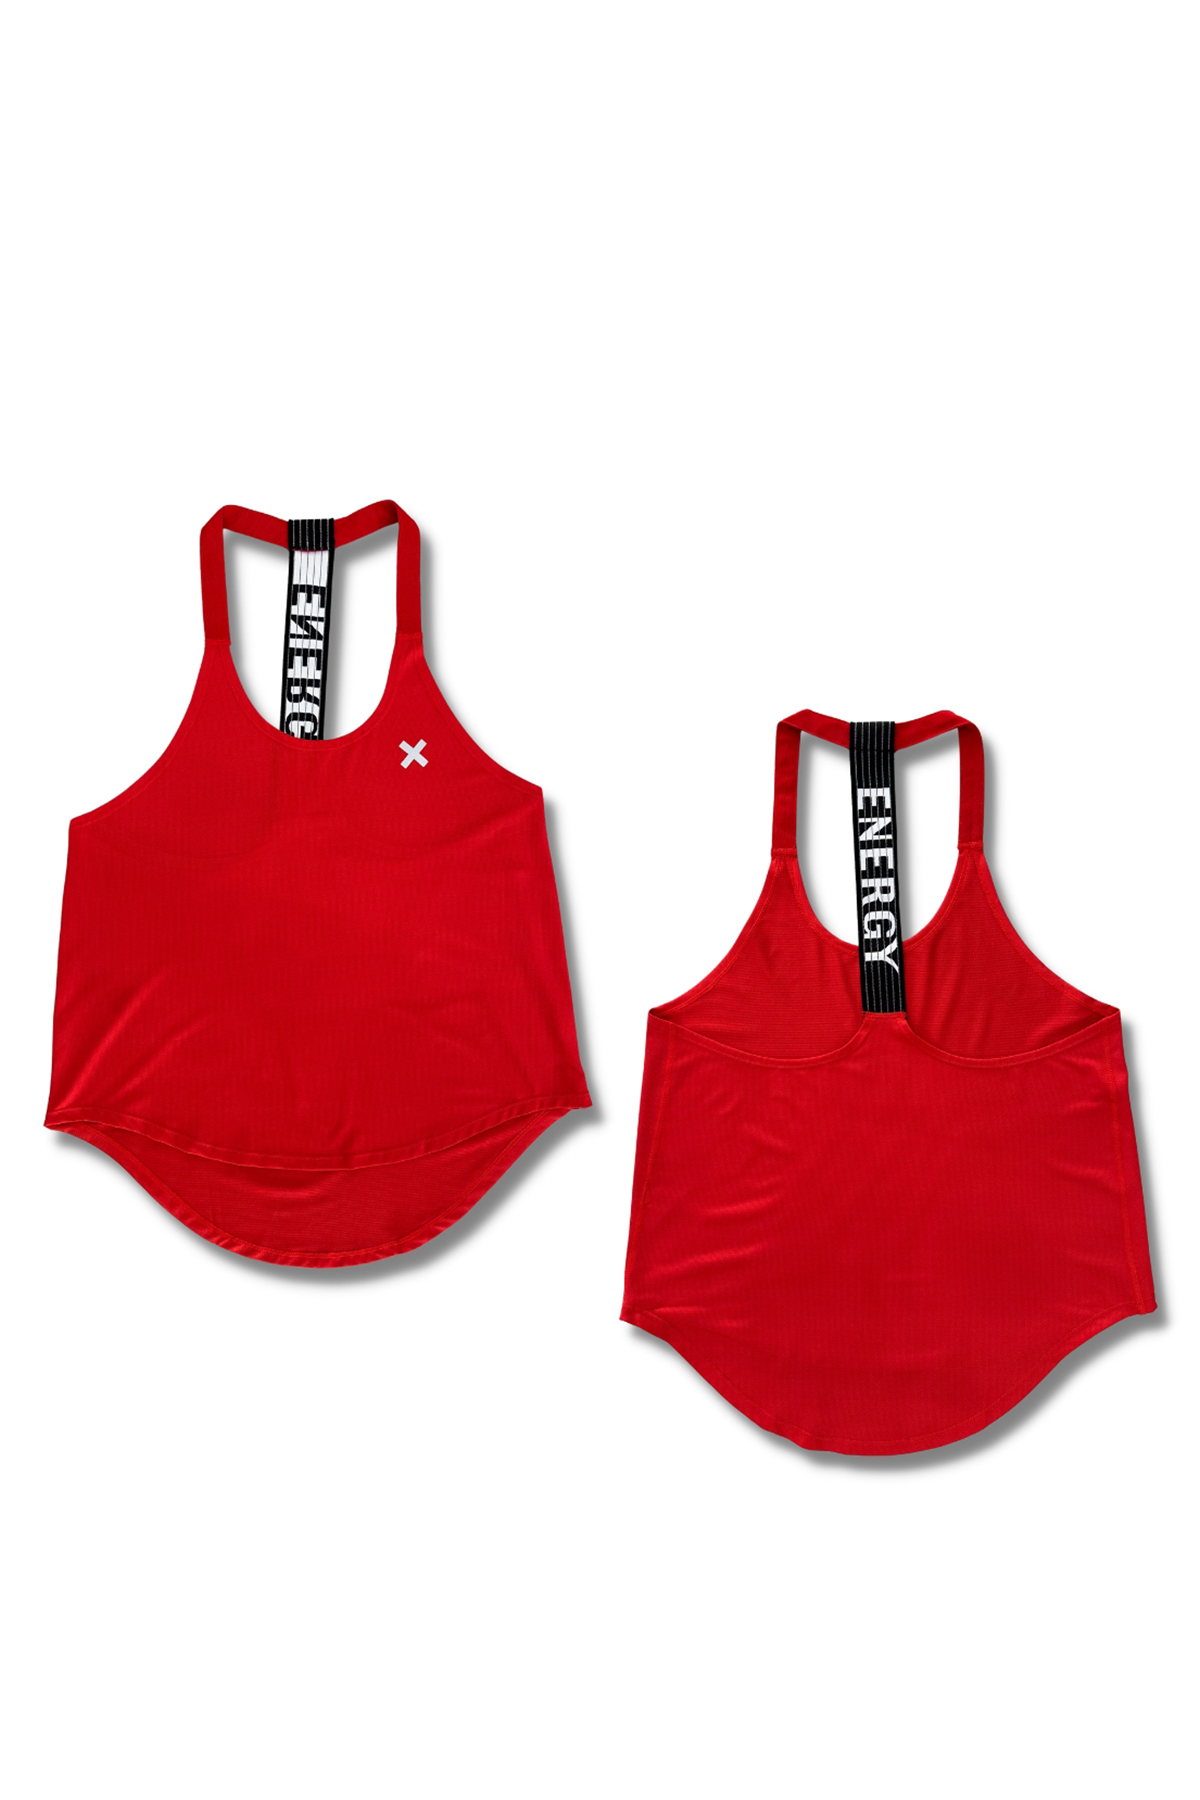 Performance-Strap-Back-Workout-Vest-for-Women-red-front-back